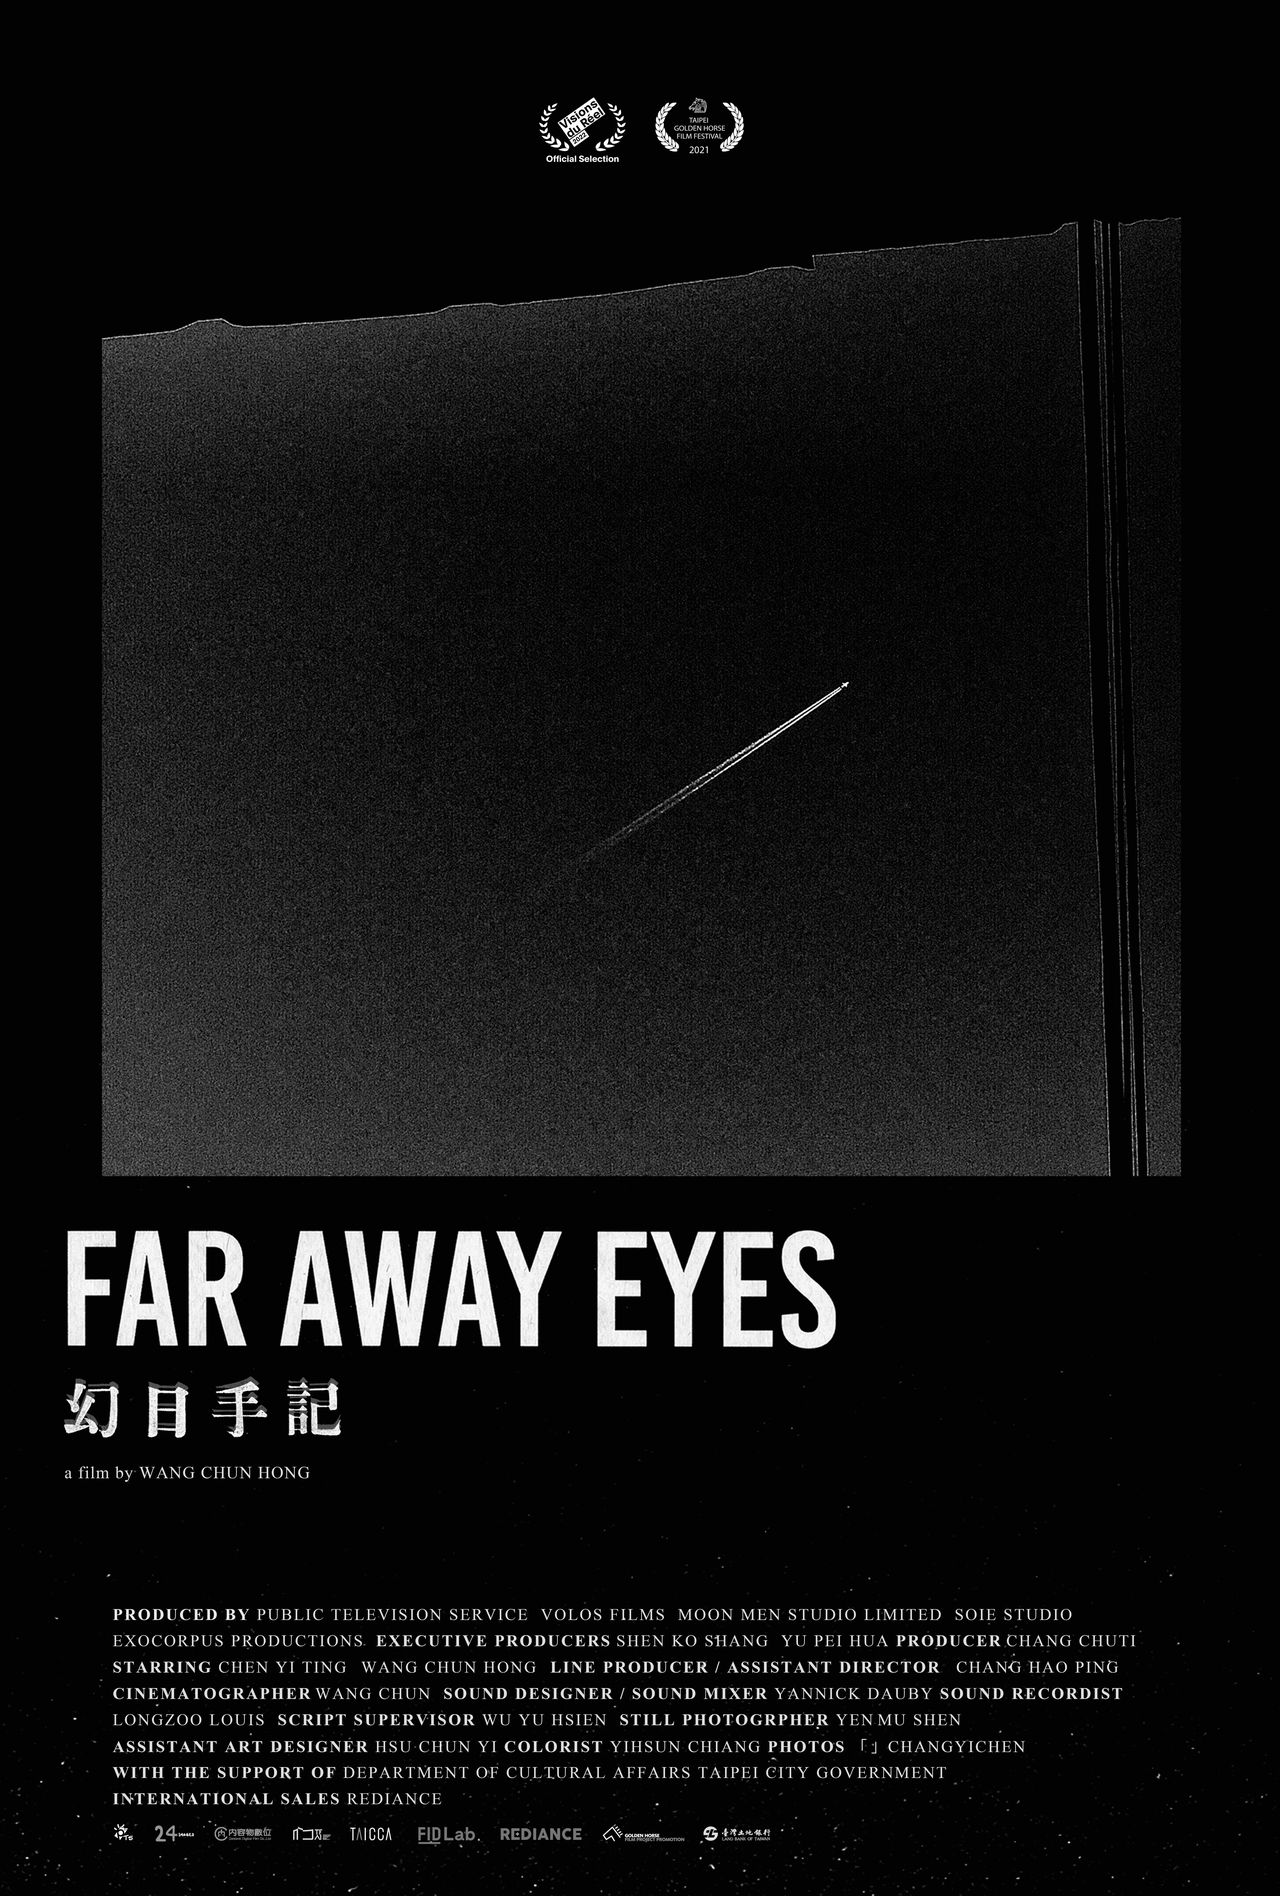 Far away eyes